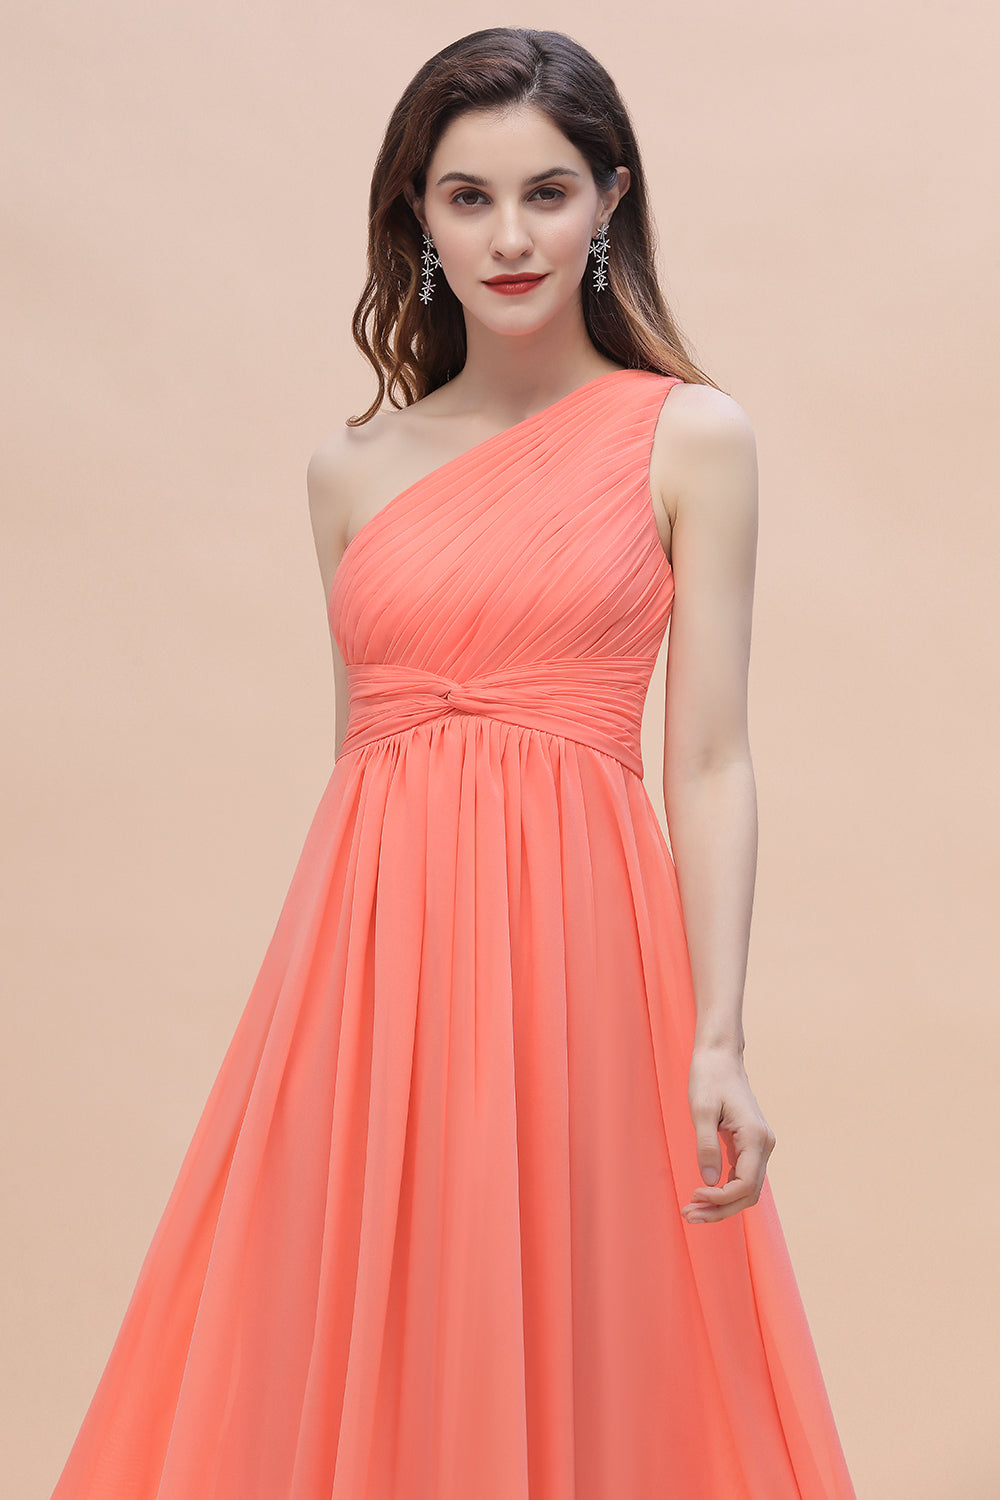 Chic One-Shoulder Ruffles Chiffon Coral Bridesmaid Dresses On Sale-27dress